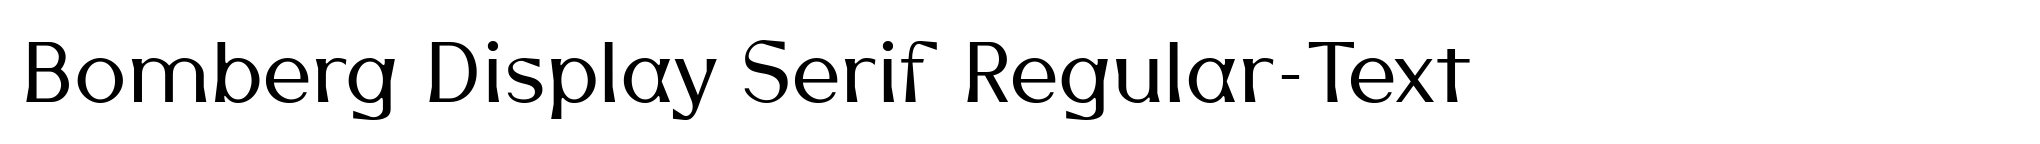 Bomberg Display Serif Regular-Text image